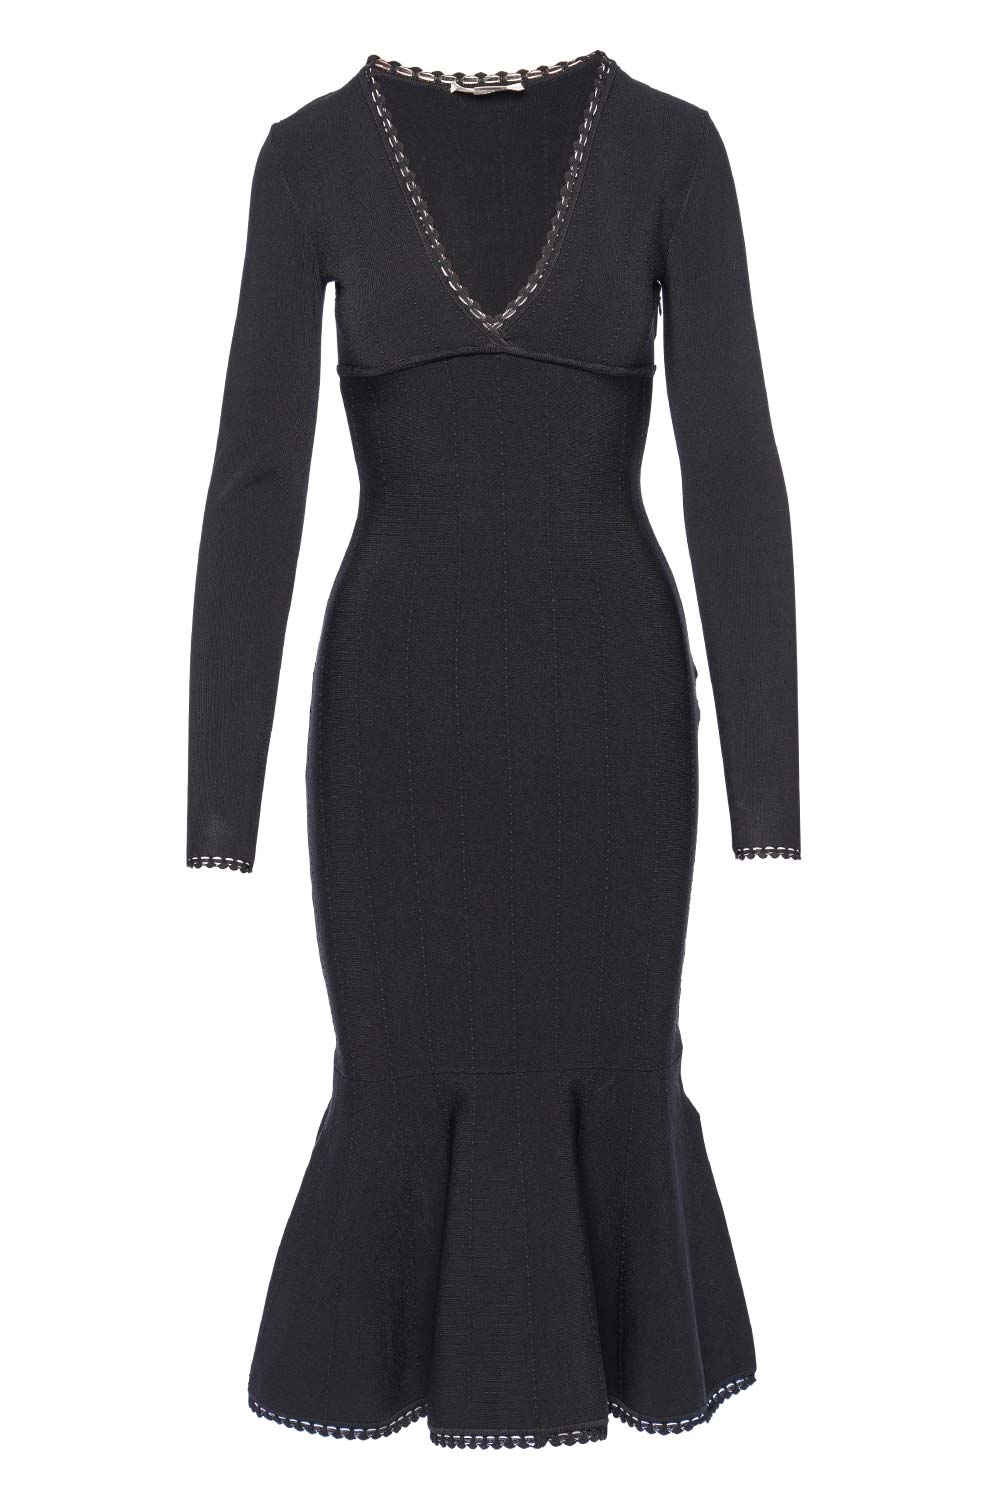 Victoria Beckham Black Long Sleeve V Neck Mid Dress